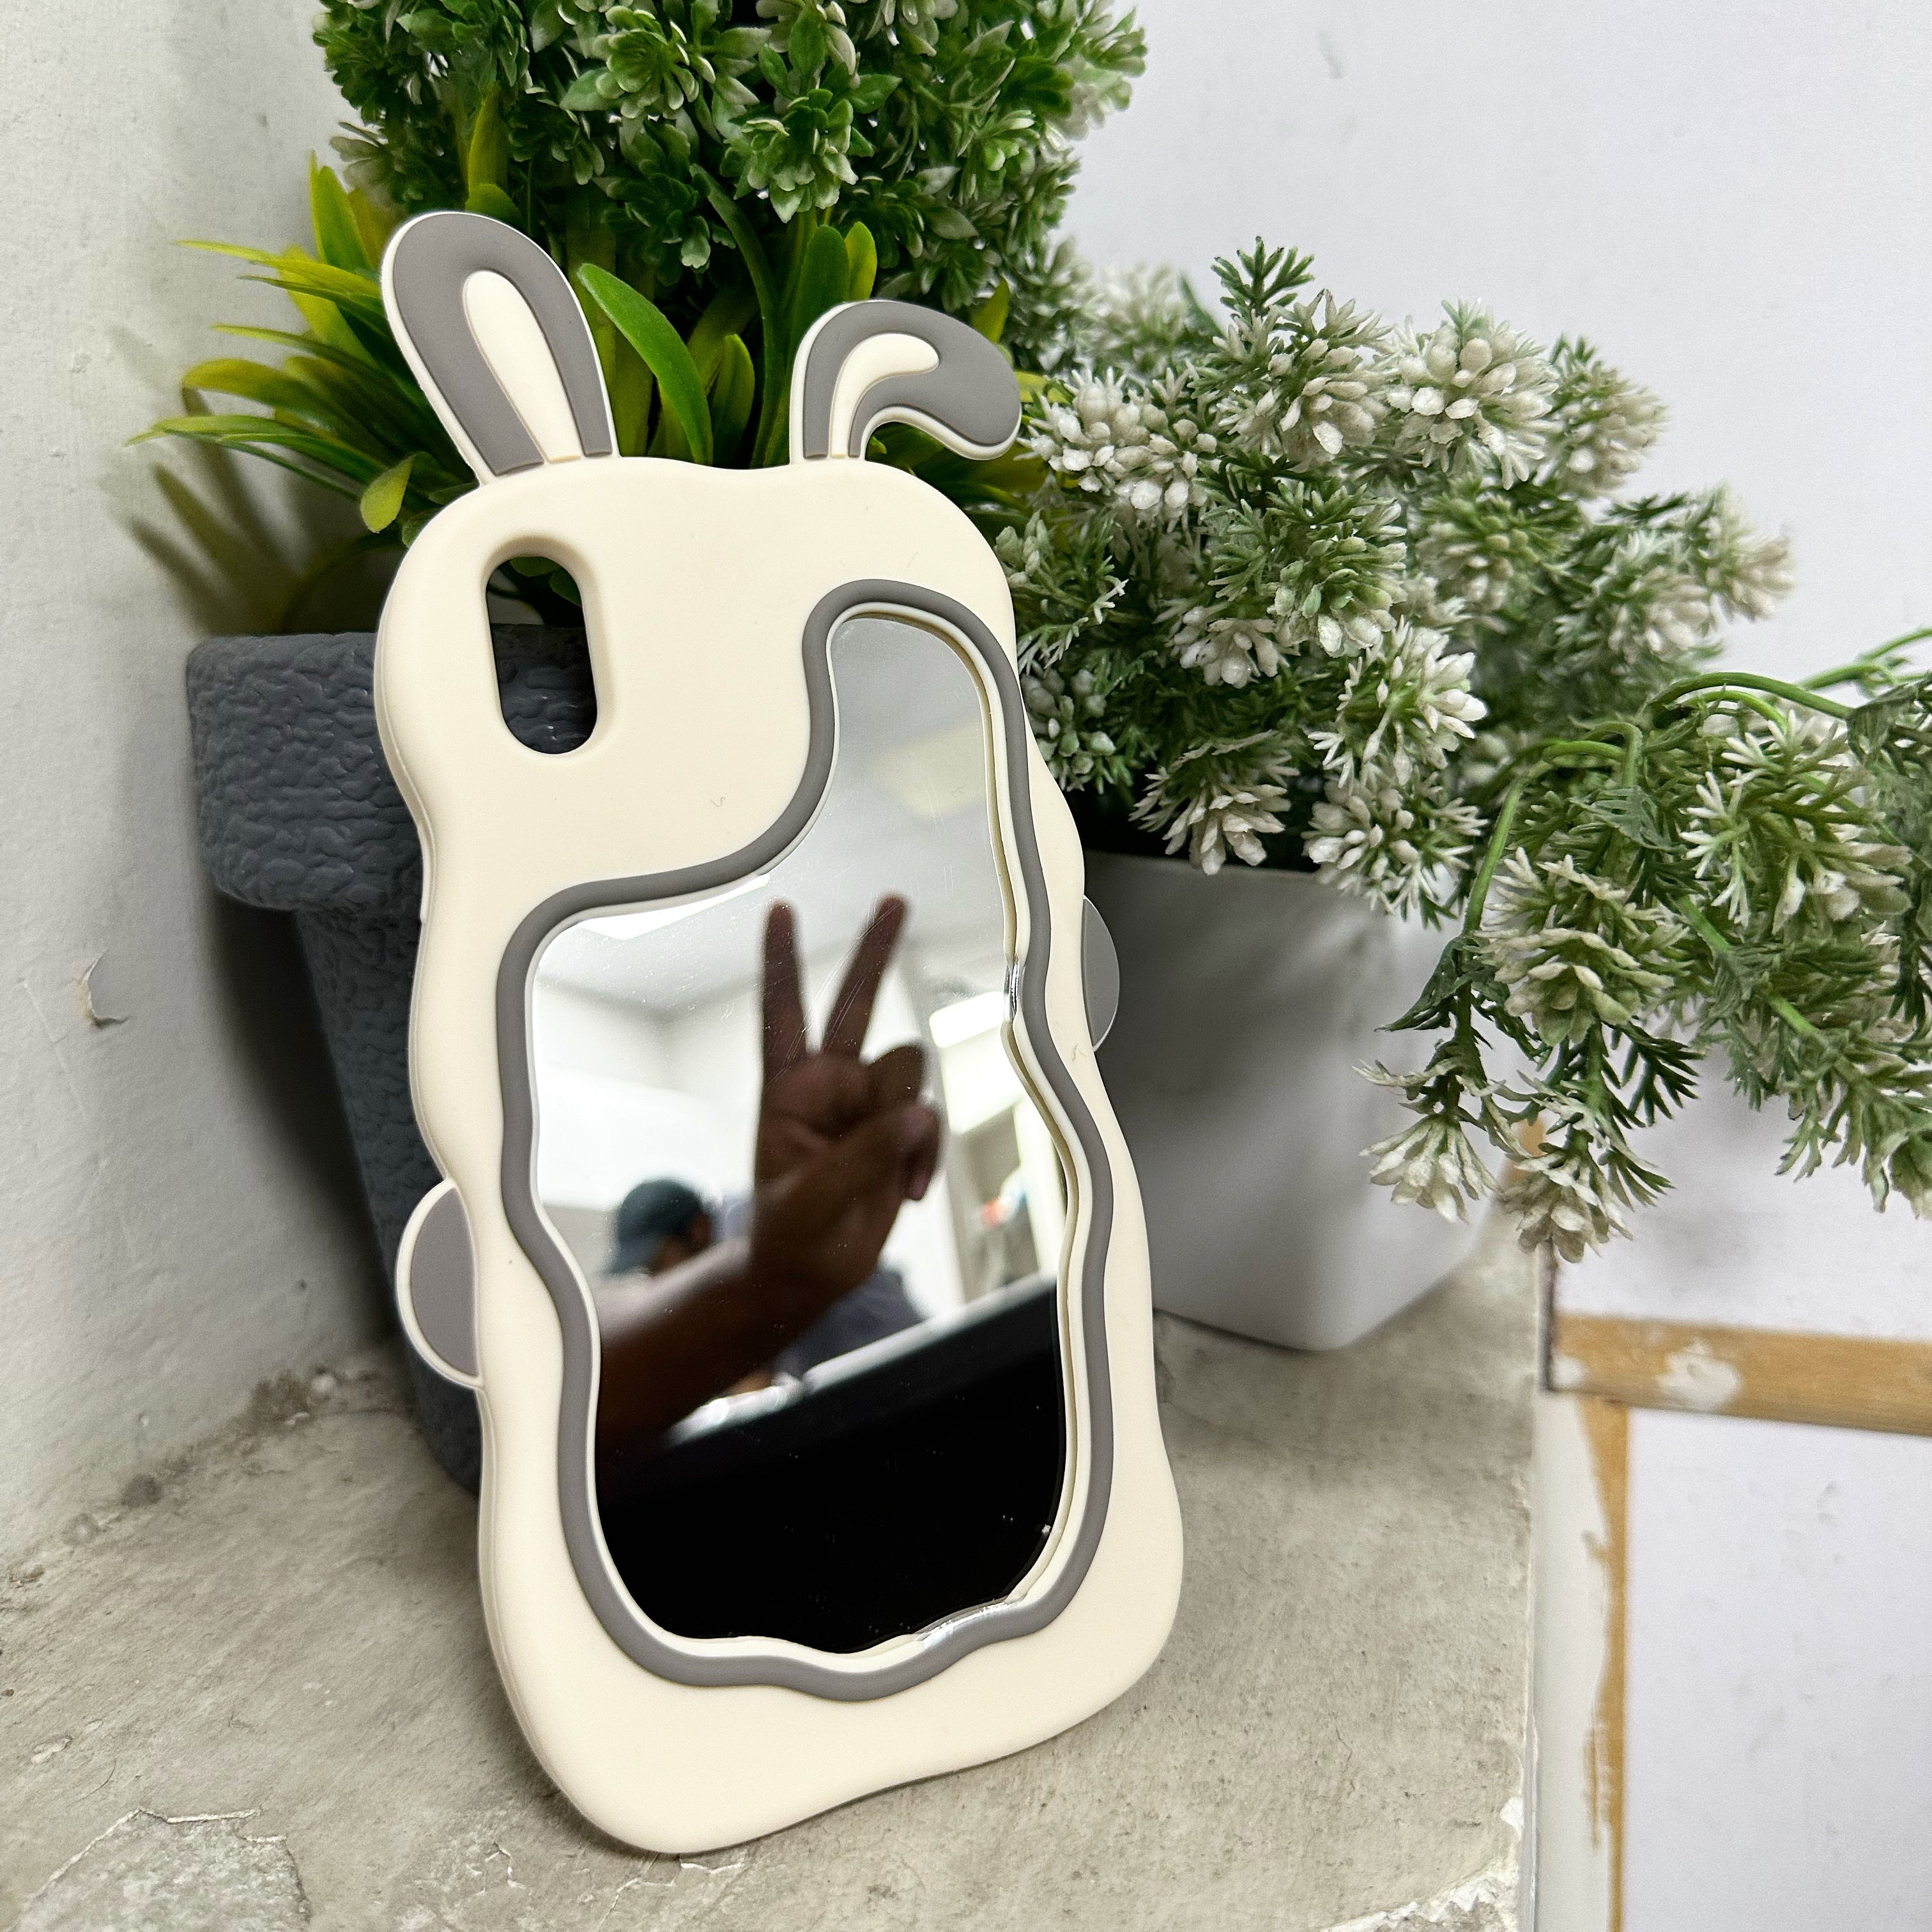 Rabitt mirror cartoon phone case for iPhone